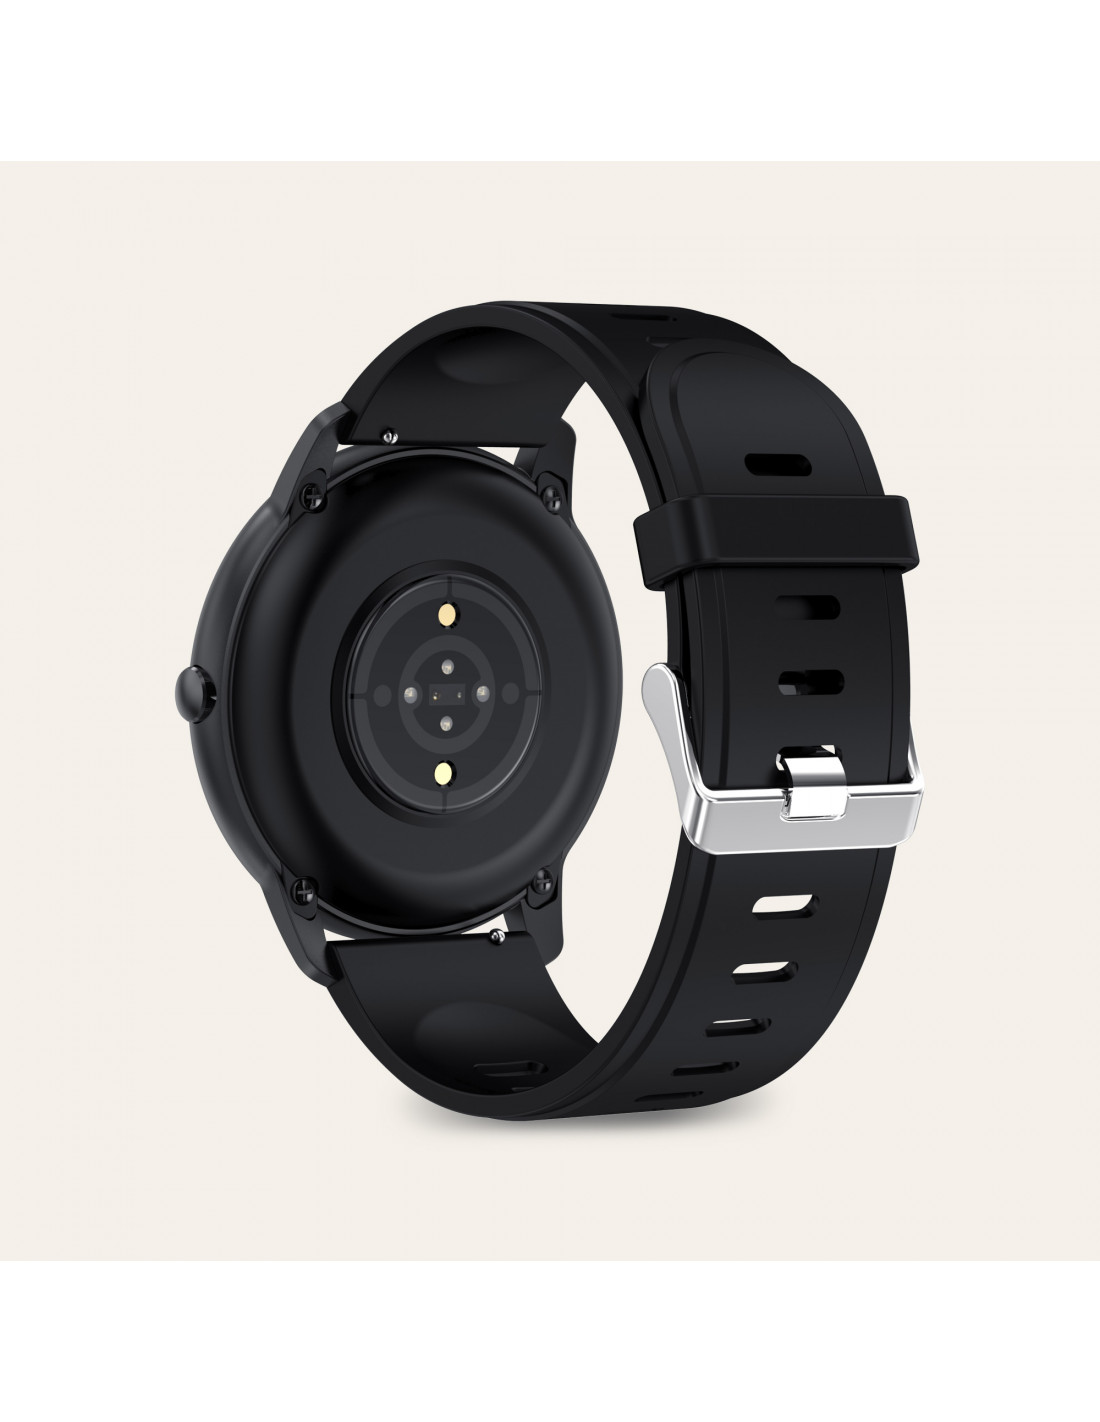 Ksix Eclipse Black Smartwatch, Screen 1.28, Bluetooth 5.0, Autonomy 7 Dias